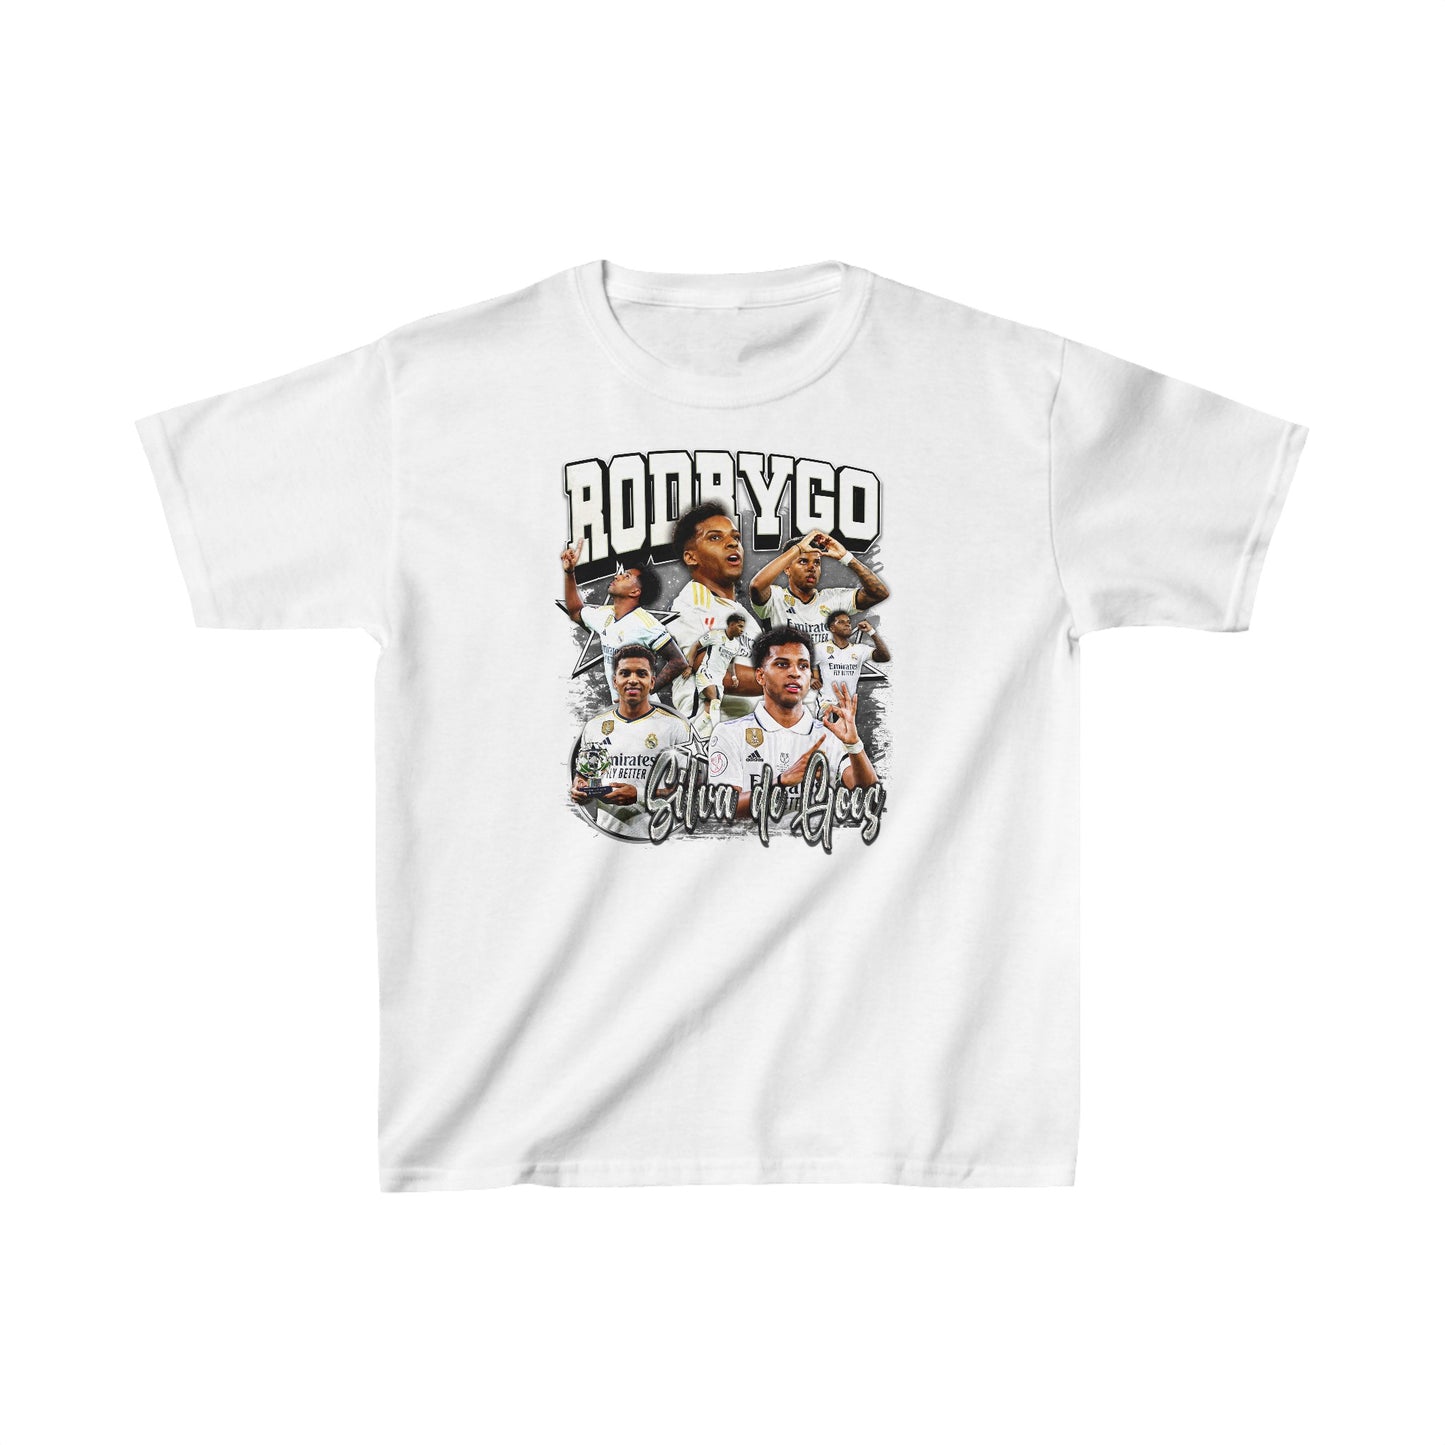 Rodrygo Real Madrid Graphic T-Shirt